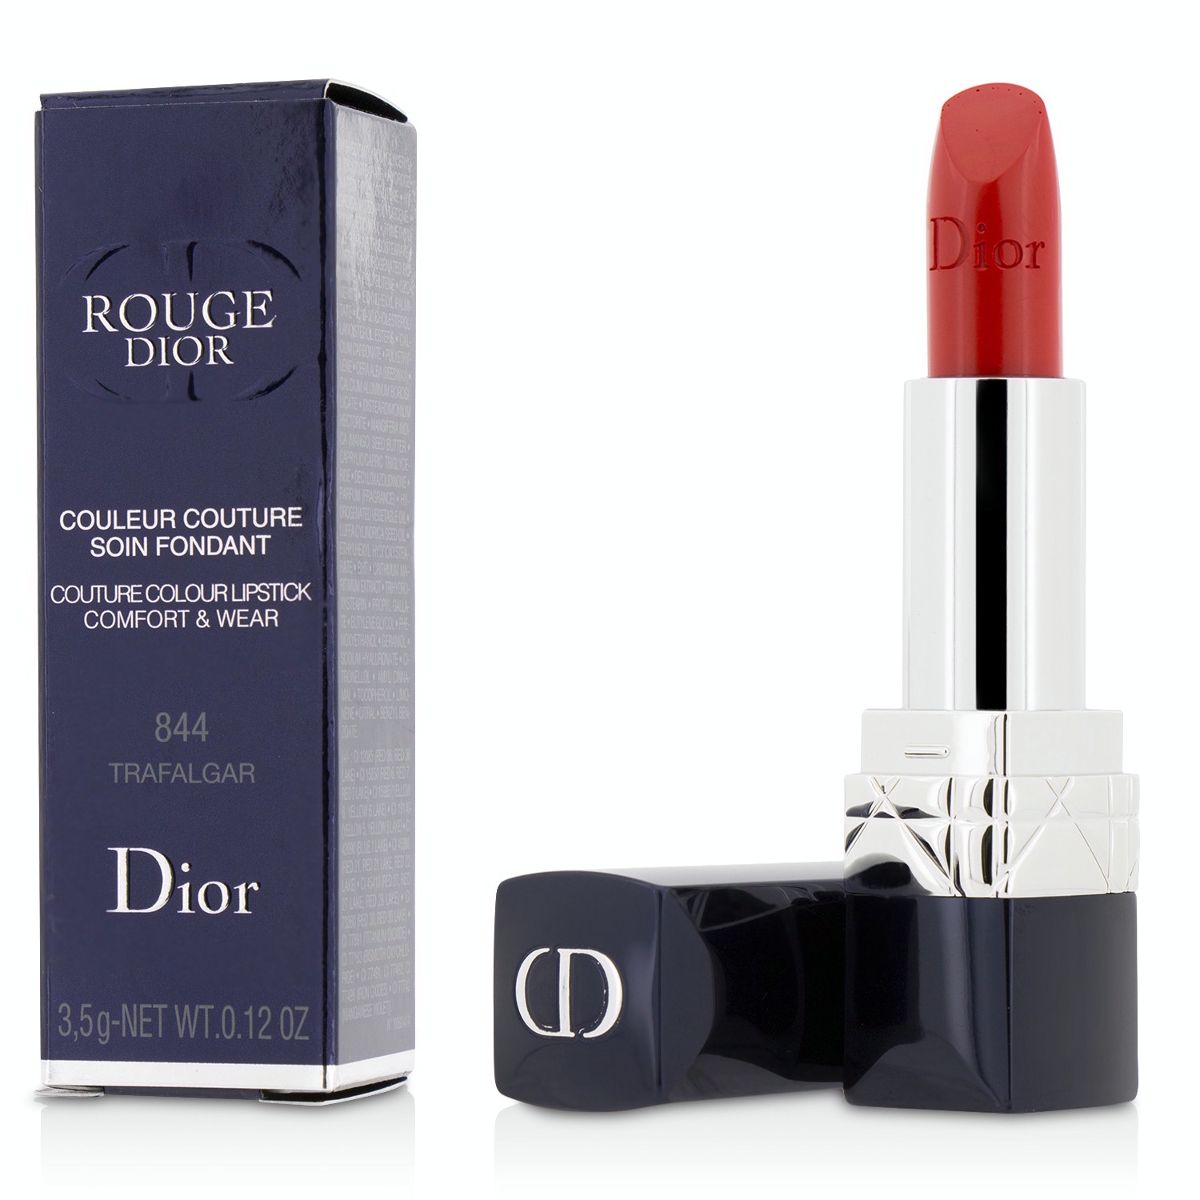 Rouge Dior Couture Colour Comfort  Wear Lipstick - # 844 Trafalgar Christian Dior Image